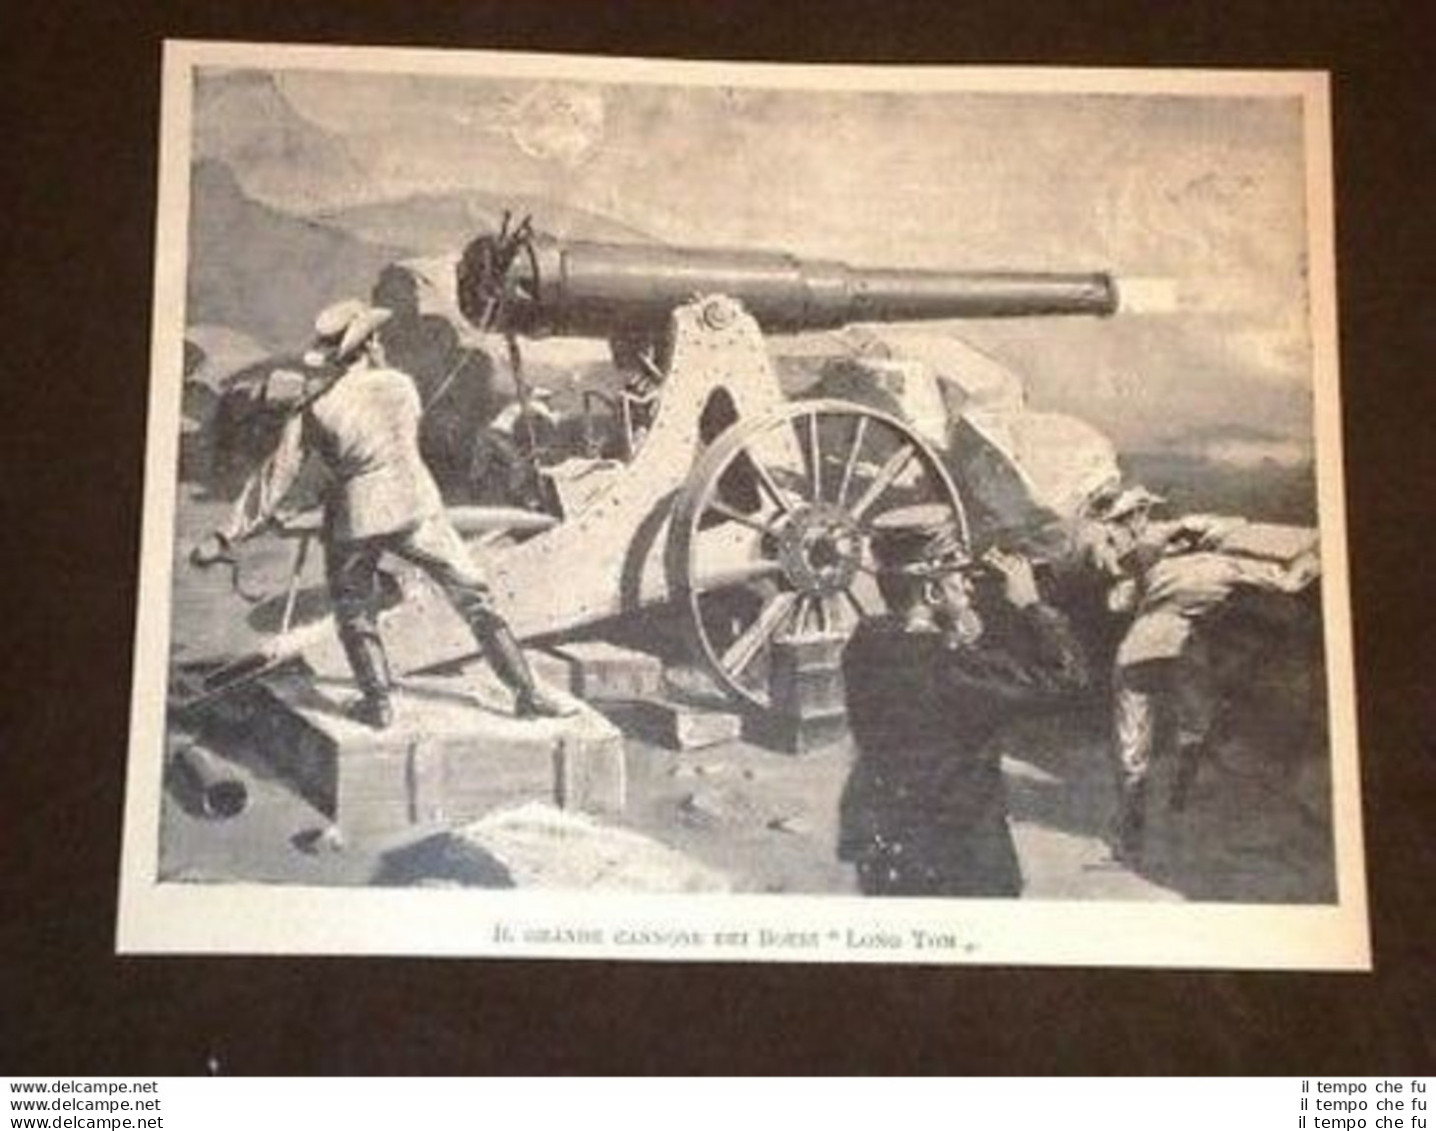 Guerra Il Grande Cannone Dei Boeri "Long Tom" - Avant 1900